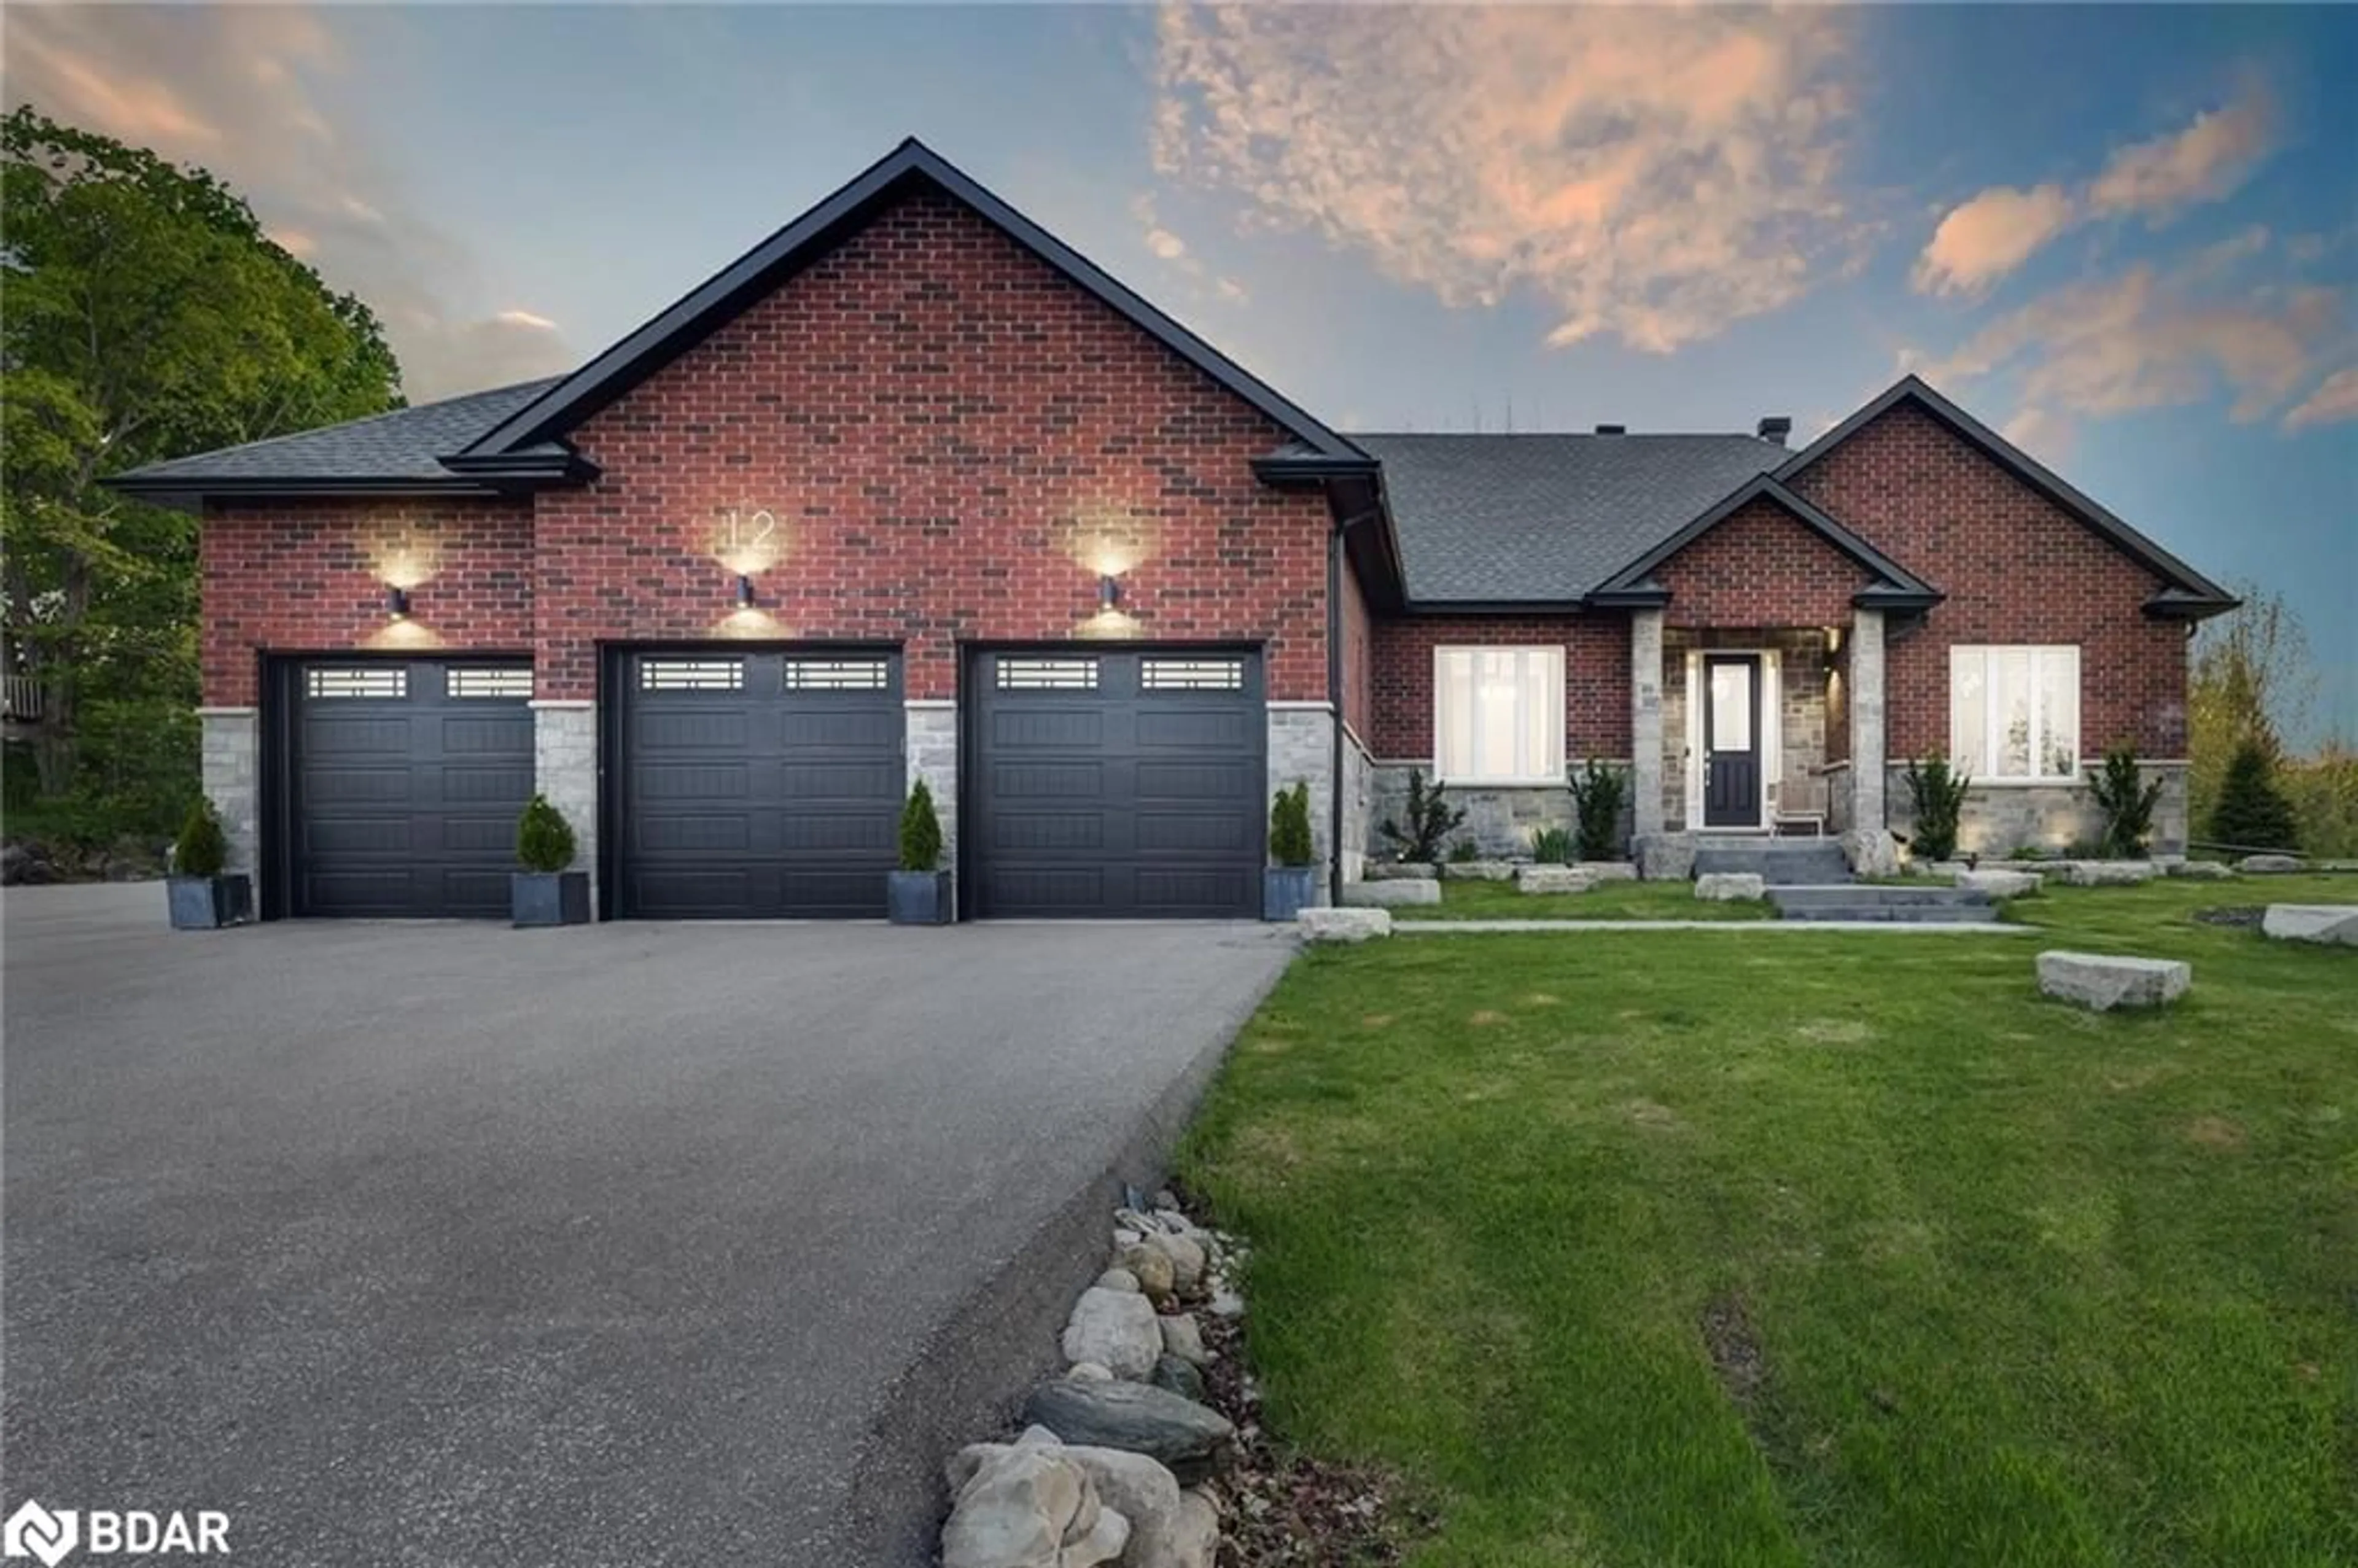 Home with brick exterior material for 12 Reids Ridge, Moonstone Ontario L0K 1N0